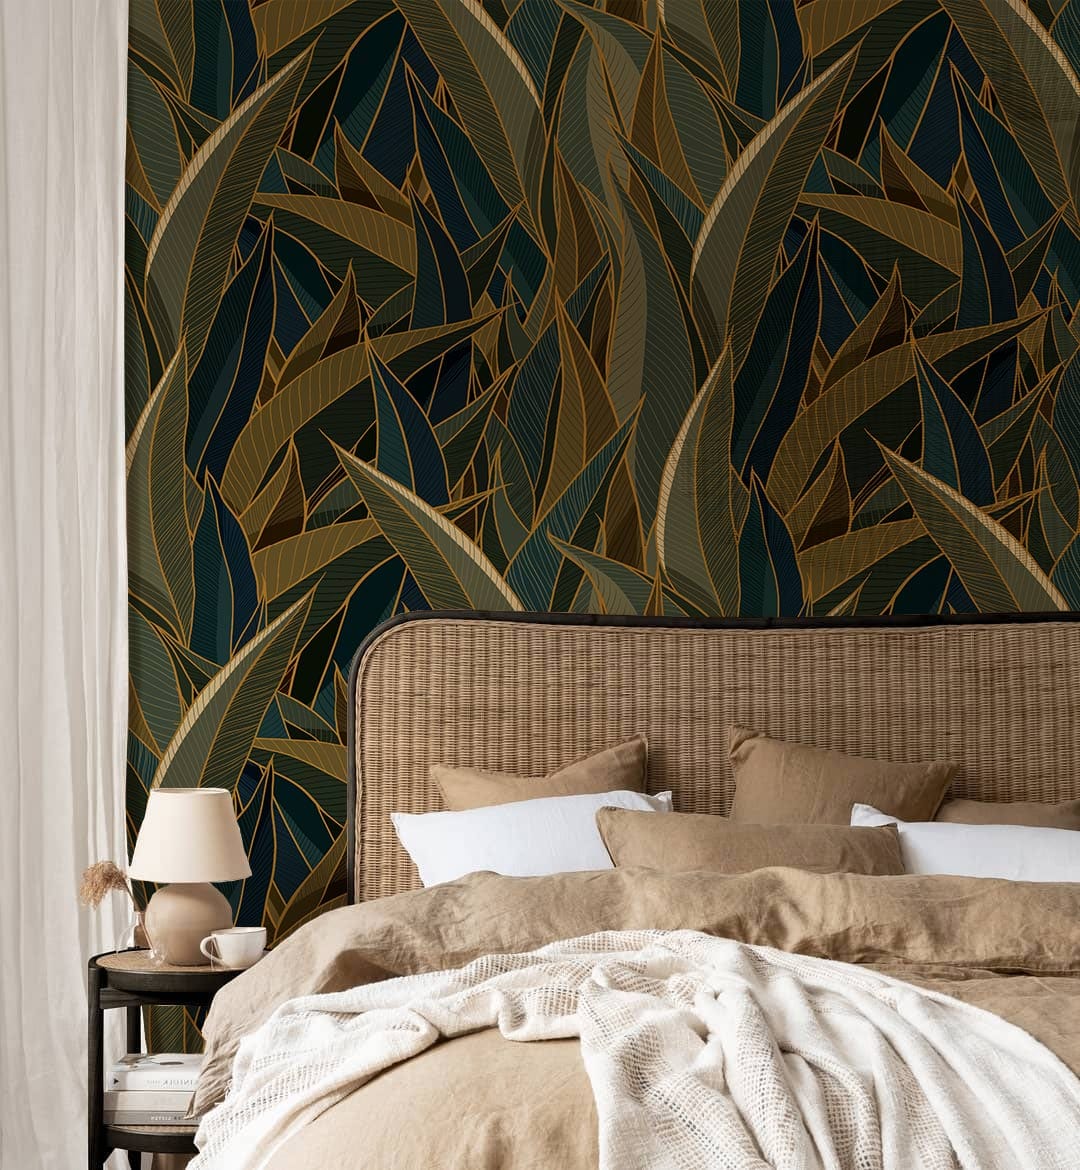 booming leaves mural wallpaper for bedroom decor